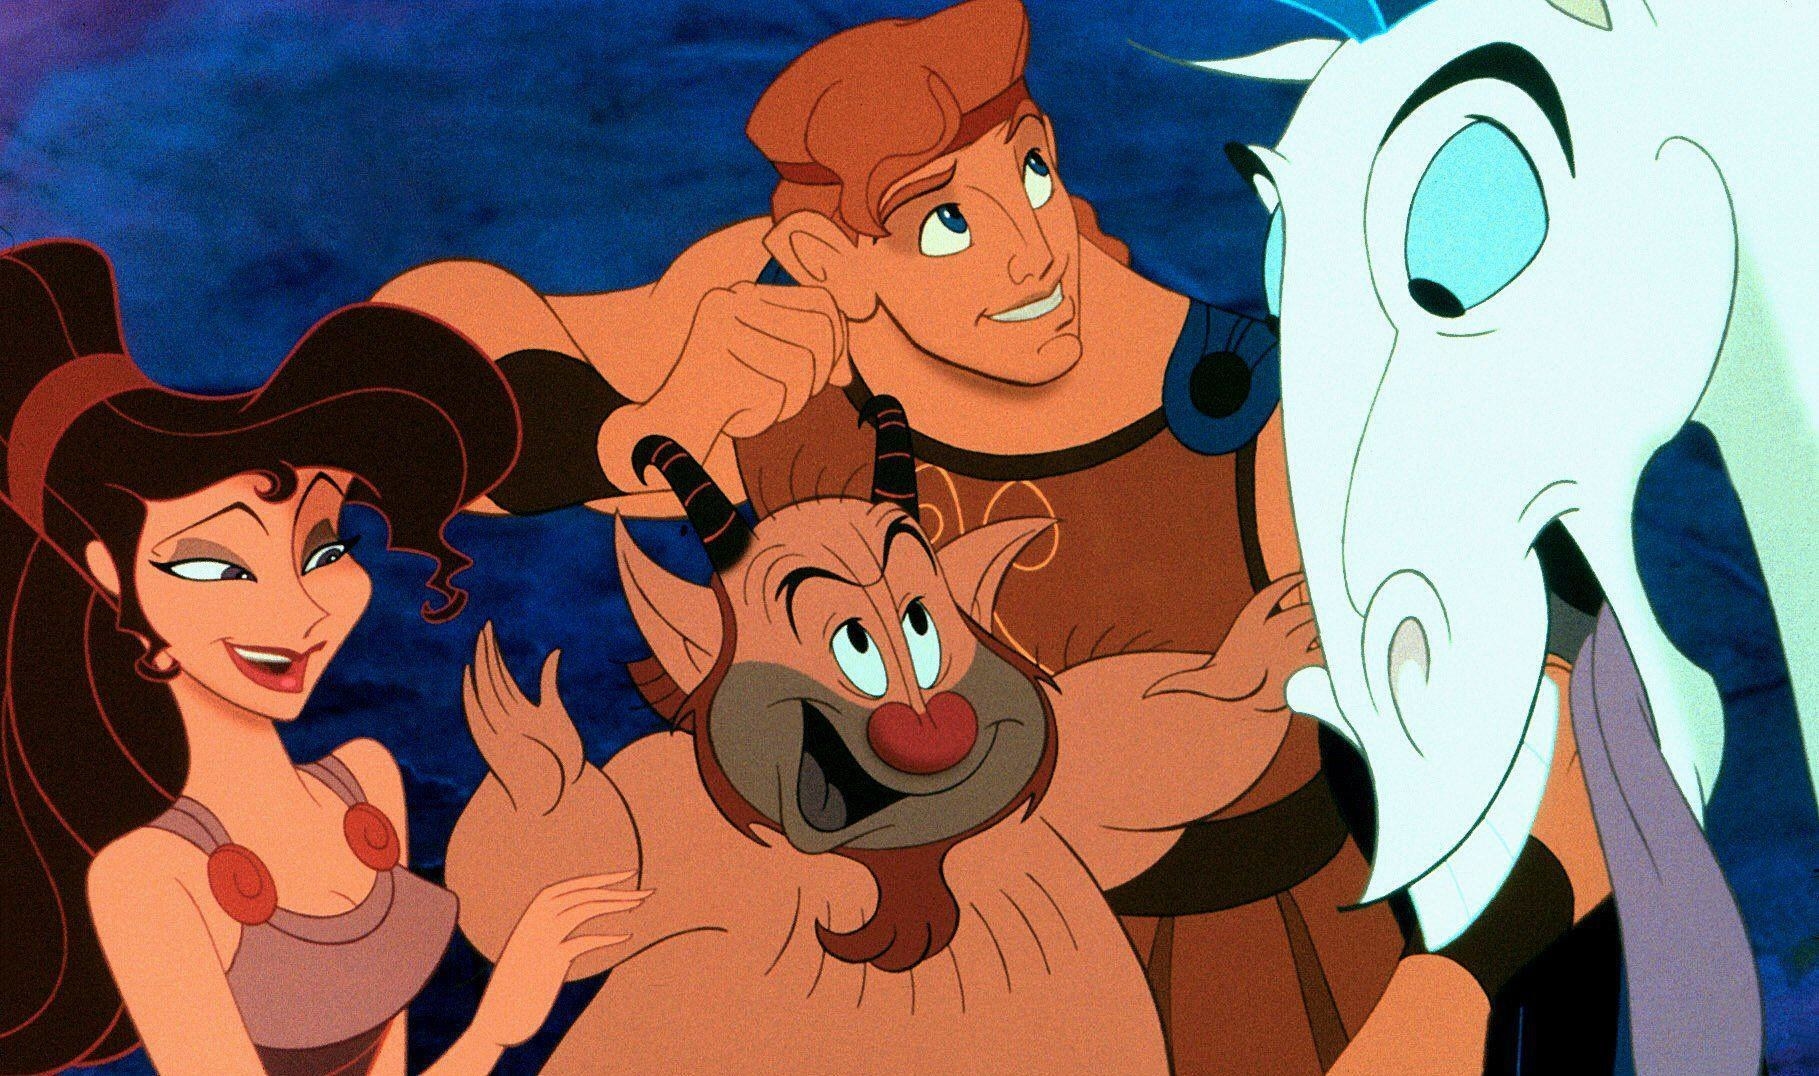 Phil, Meg, Hercules and Pegasus assemble in &quot;Hercules&quot;